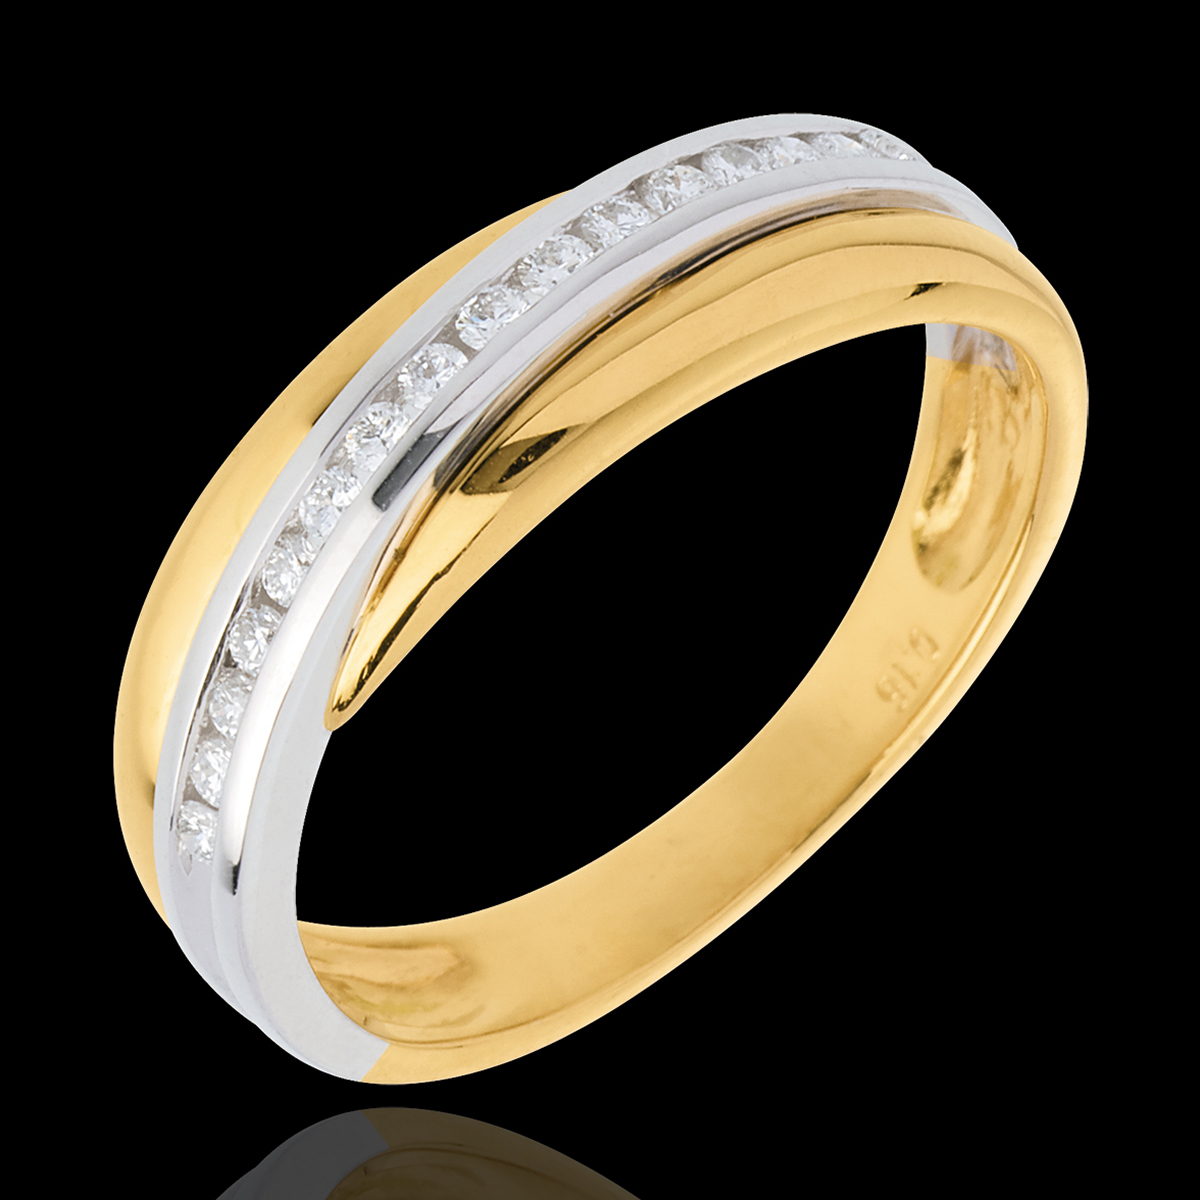 Wedding ring yellow gold-white gold semi-paved - 16 diamonds : Edenly ...